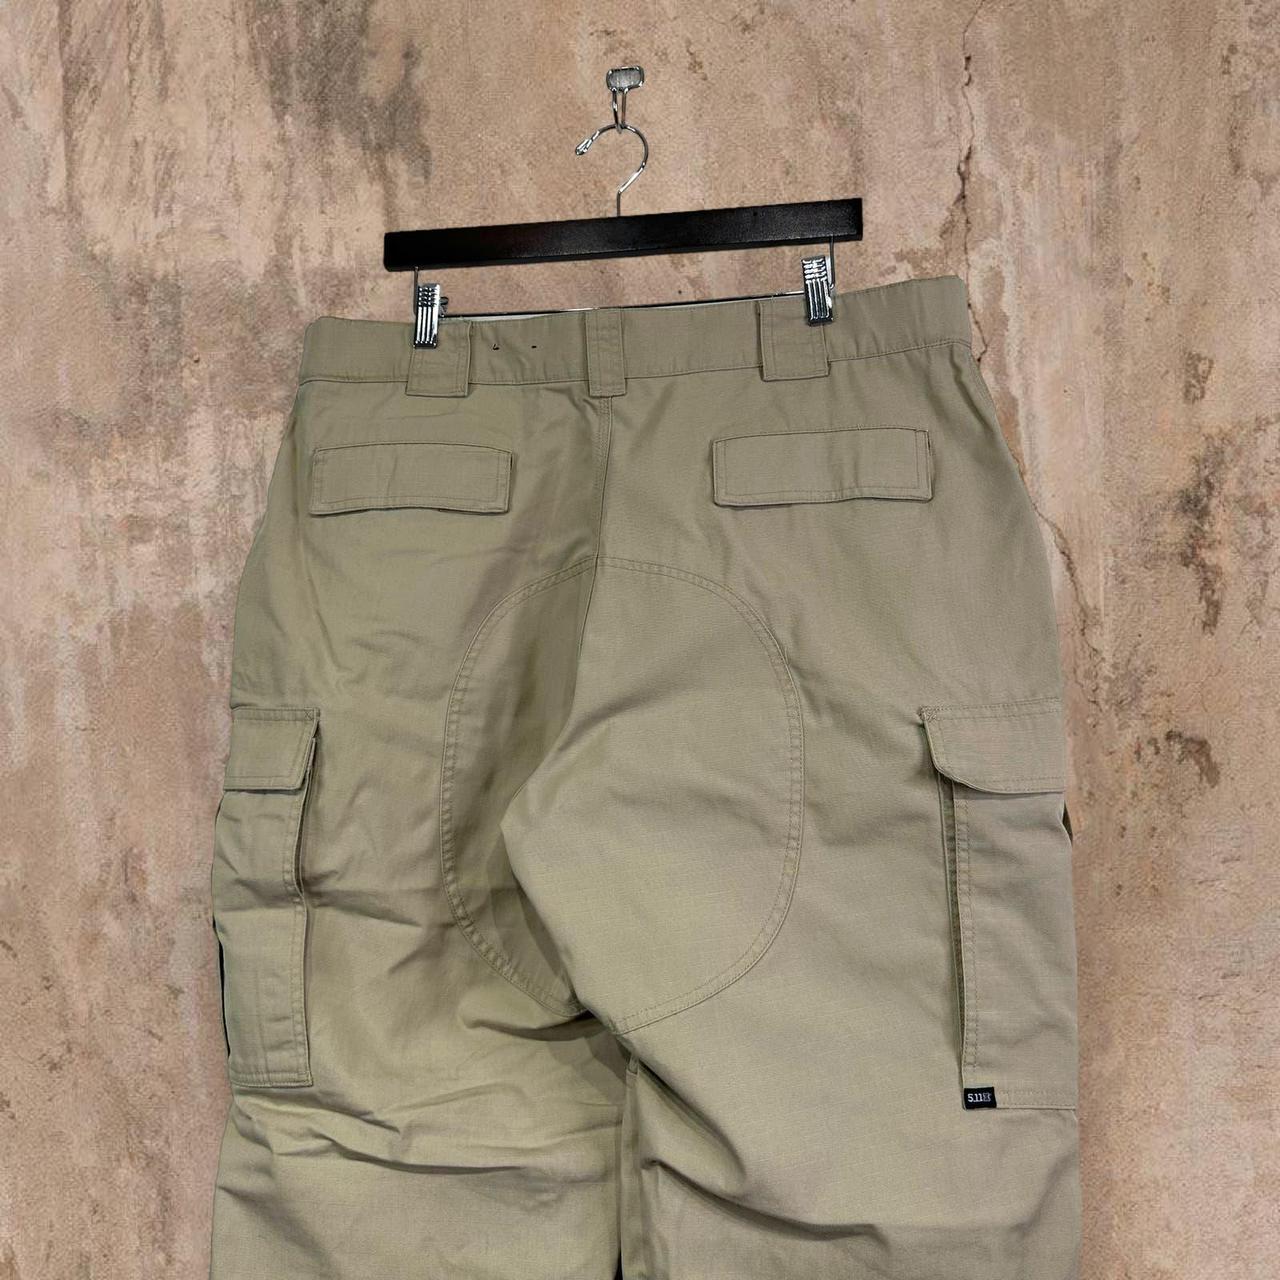 Tactical Cargo Trouser | Khaki – Olive Planet